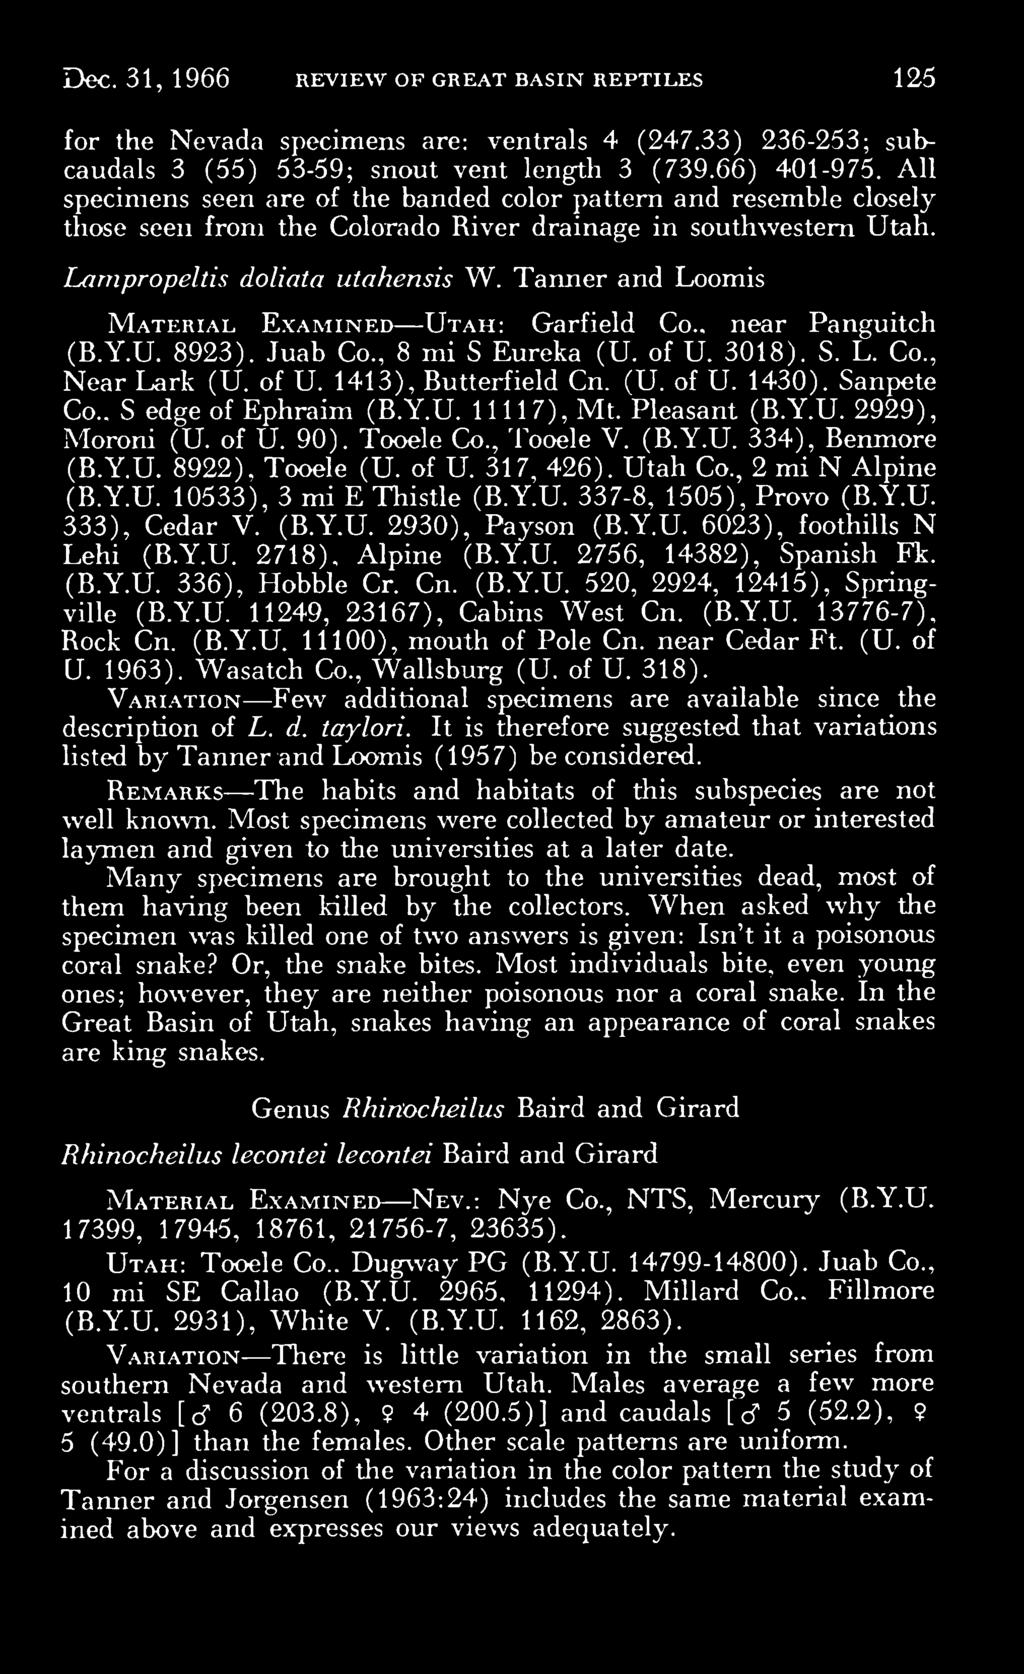 Tanner and Loomis Material Examined Utah: Garfield Co., near Panguitch ( 8923). Juab Co., 8 mi S Eureka (U. of U. 3018). S. L. Co., Near Lark (U. of U. 1413), Butterfield Cn. (U. of U. 1430).